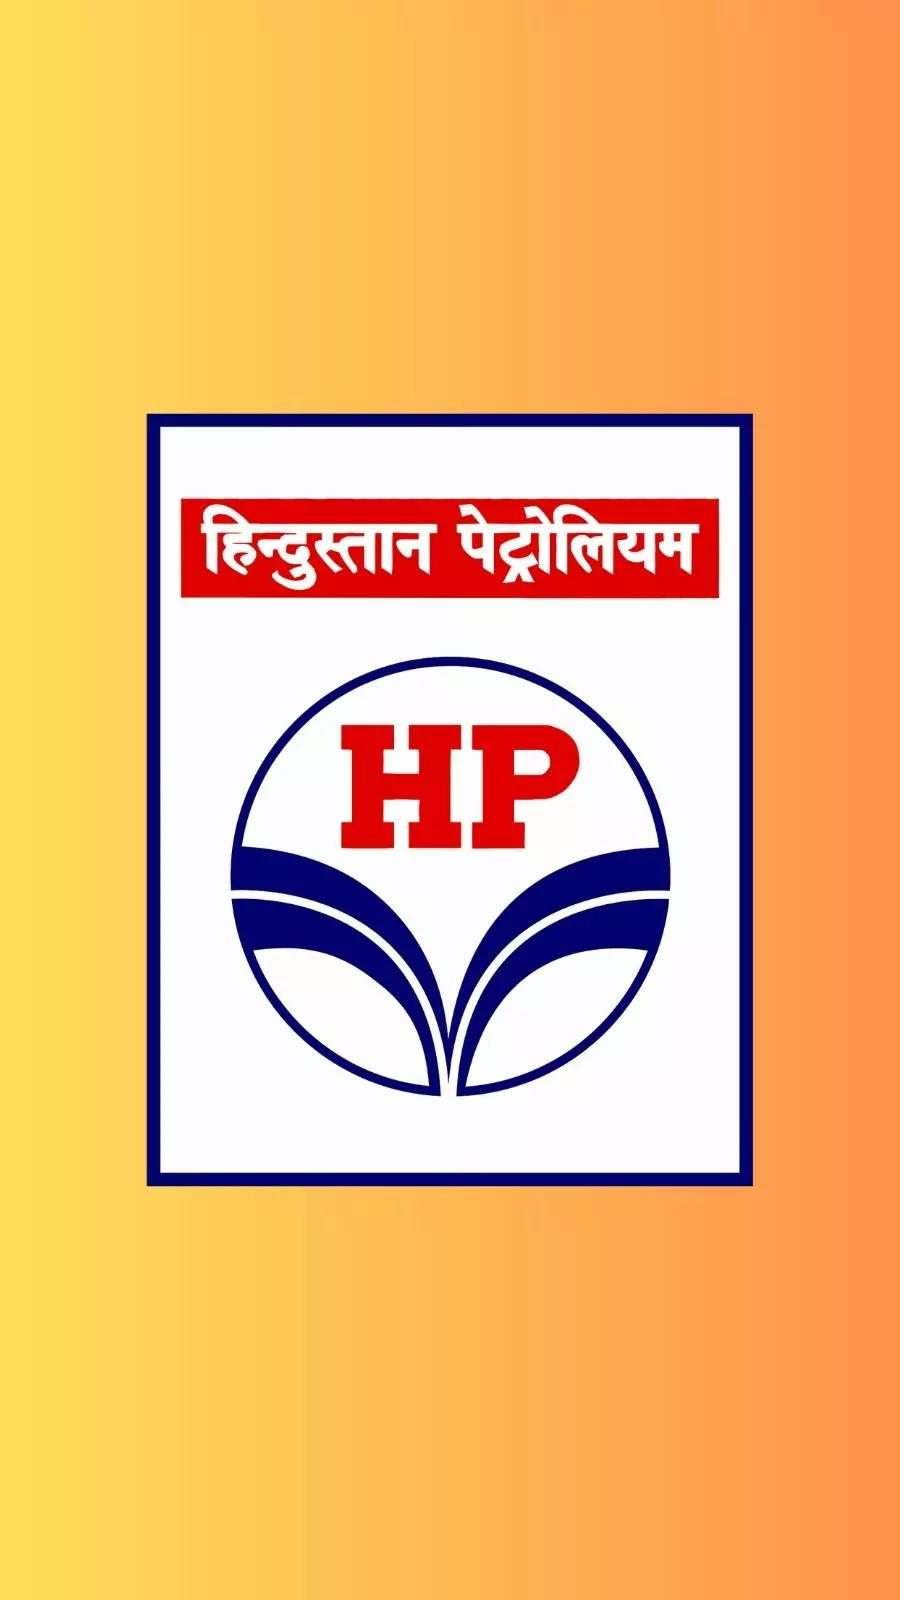 Hindustan Petroleum - Wikipedia